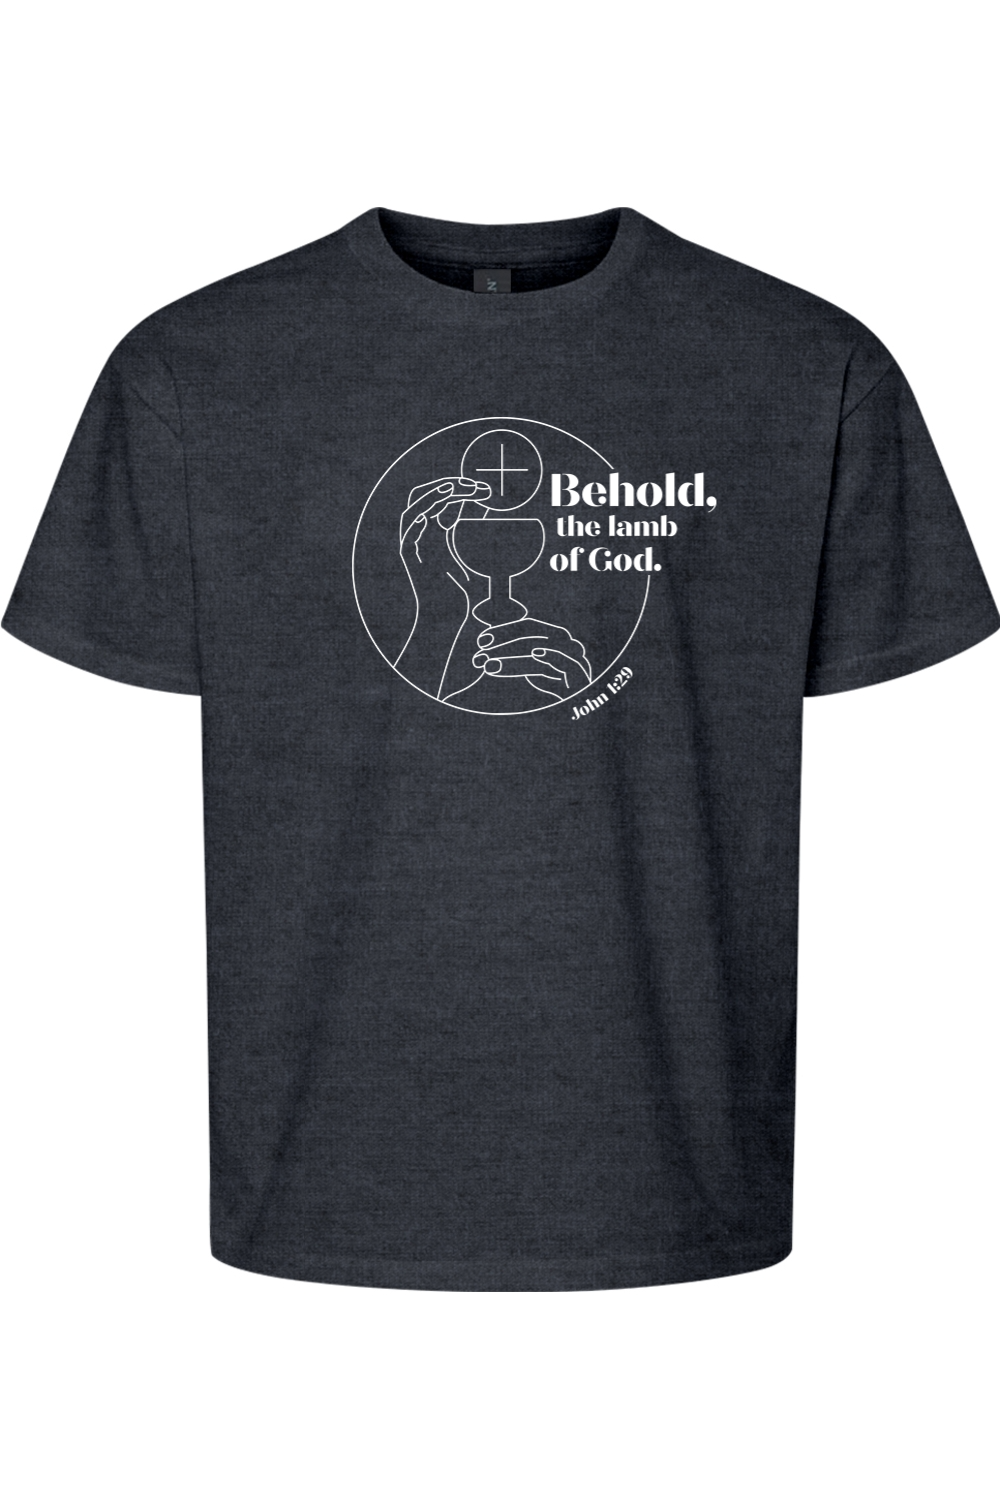 Behold the Lamb of God - John 1:29 T-shirt - youth